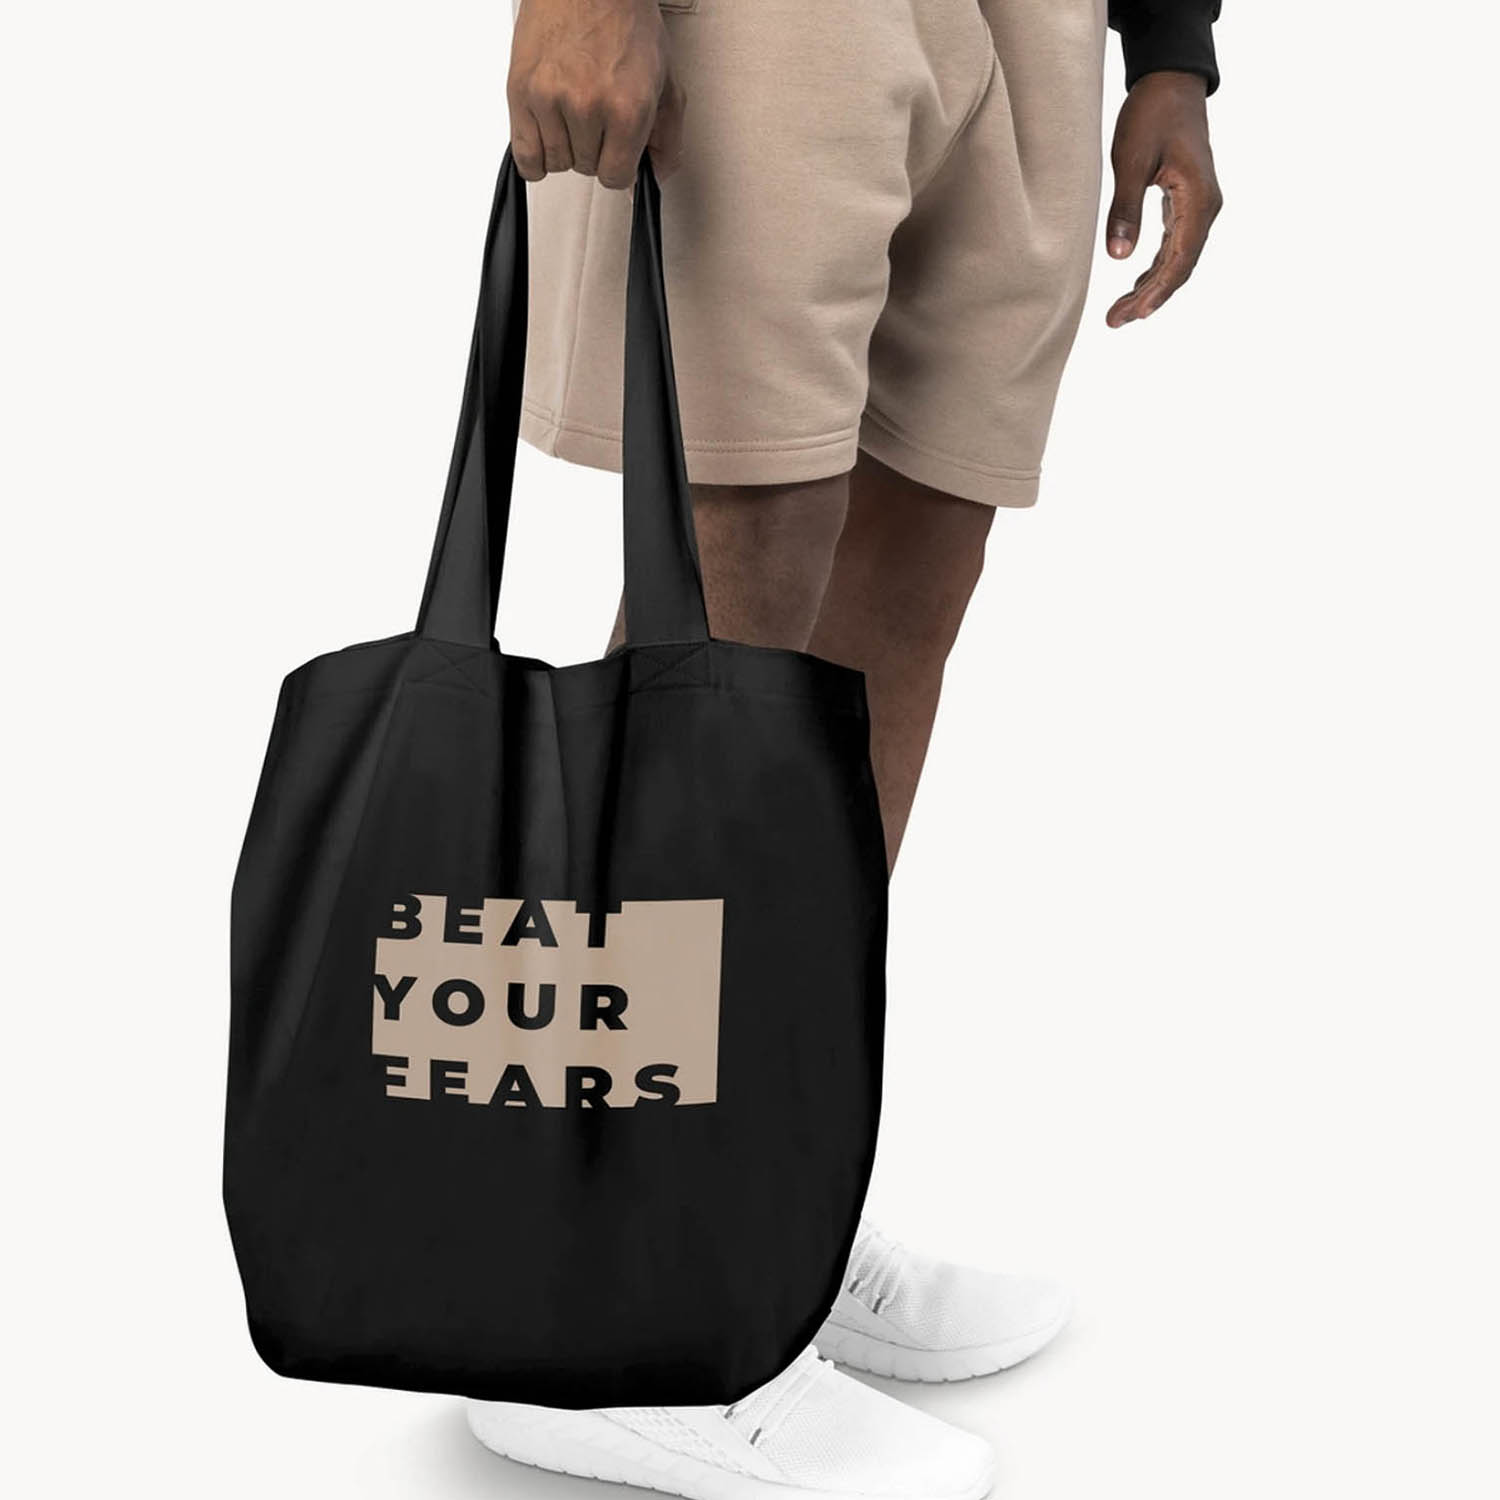 https://denniswisser.com/wp-content/uploads/2015/08/black-cotton-shopping-bag.jpg